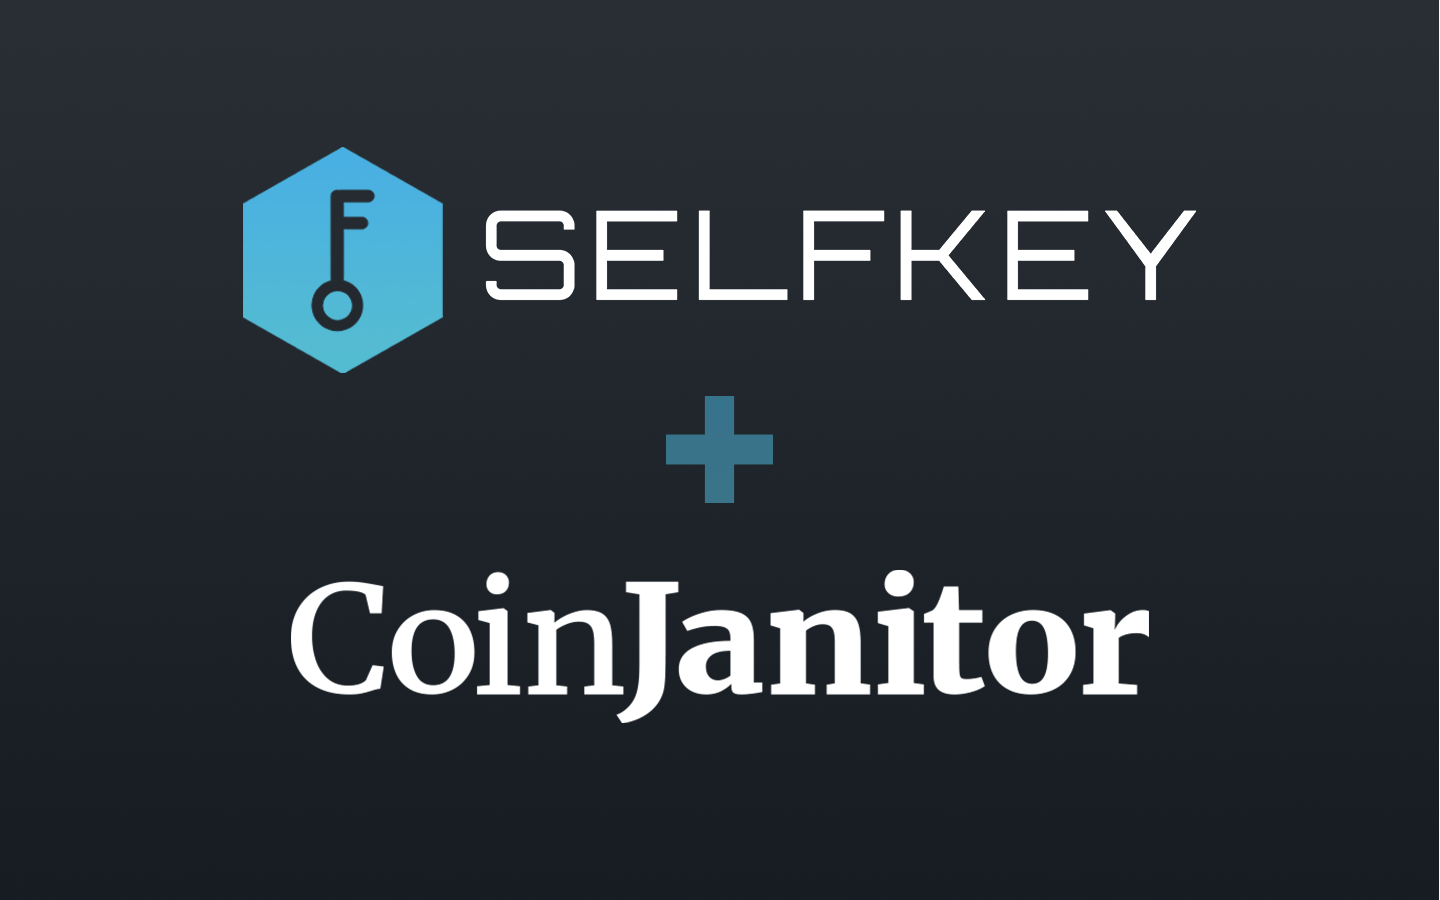 Selfkey Logo - SelfKey will provide KYC and identity advisory services to Coin Janitor